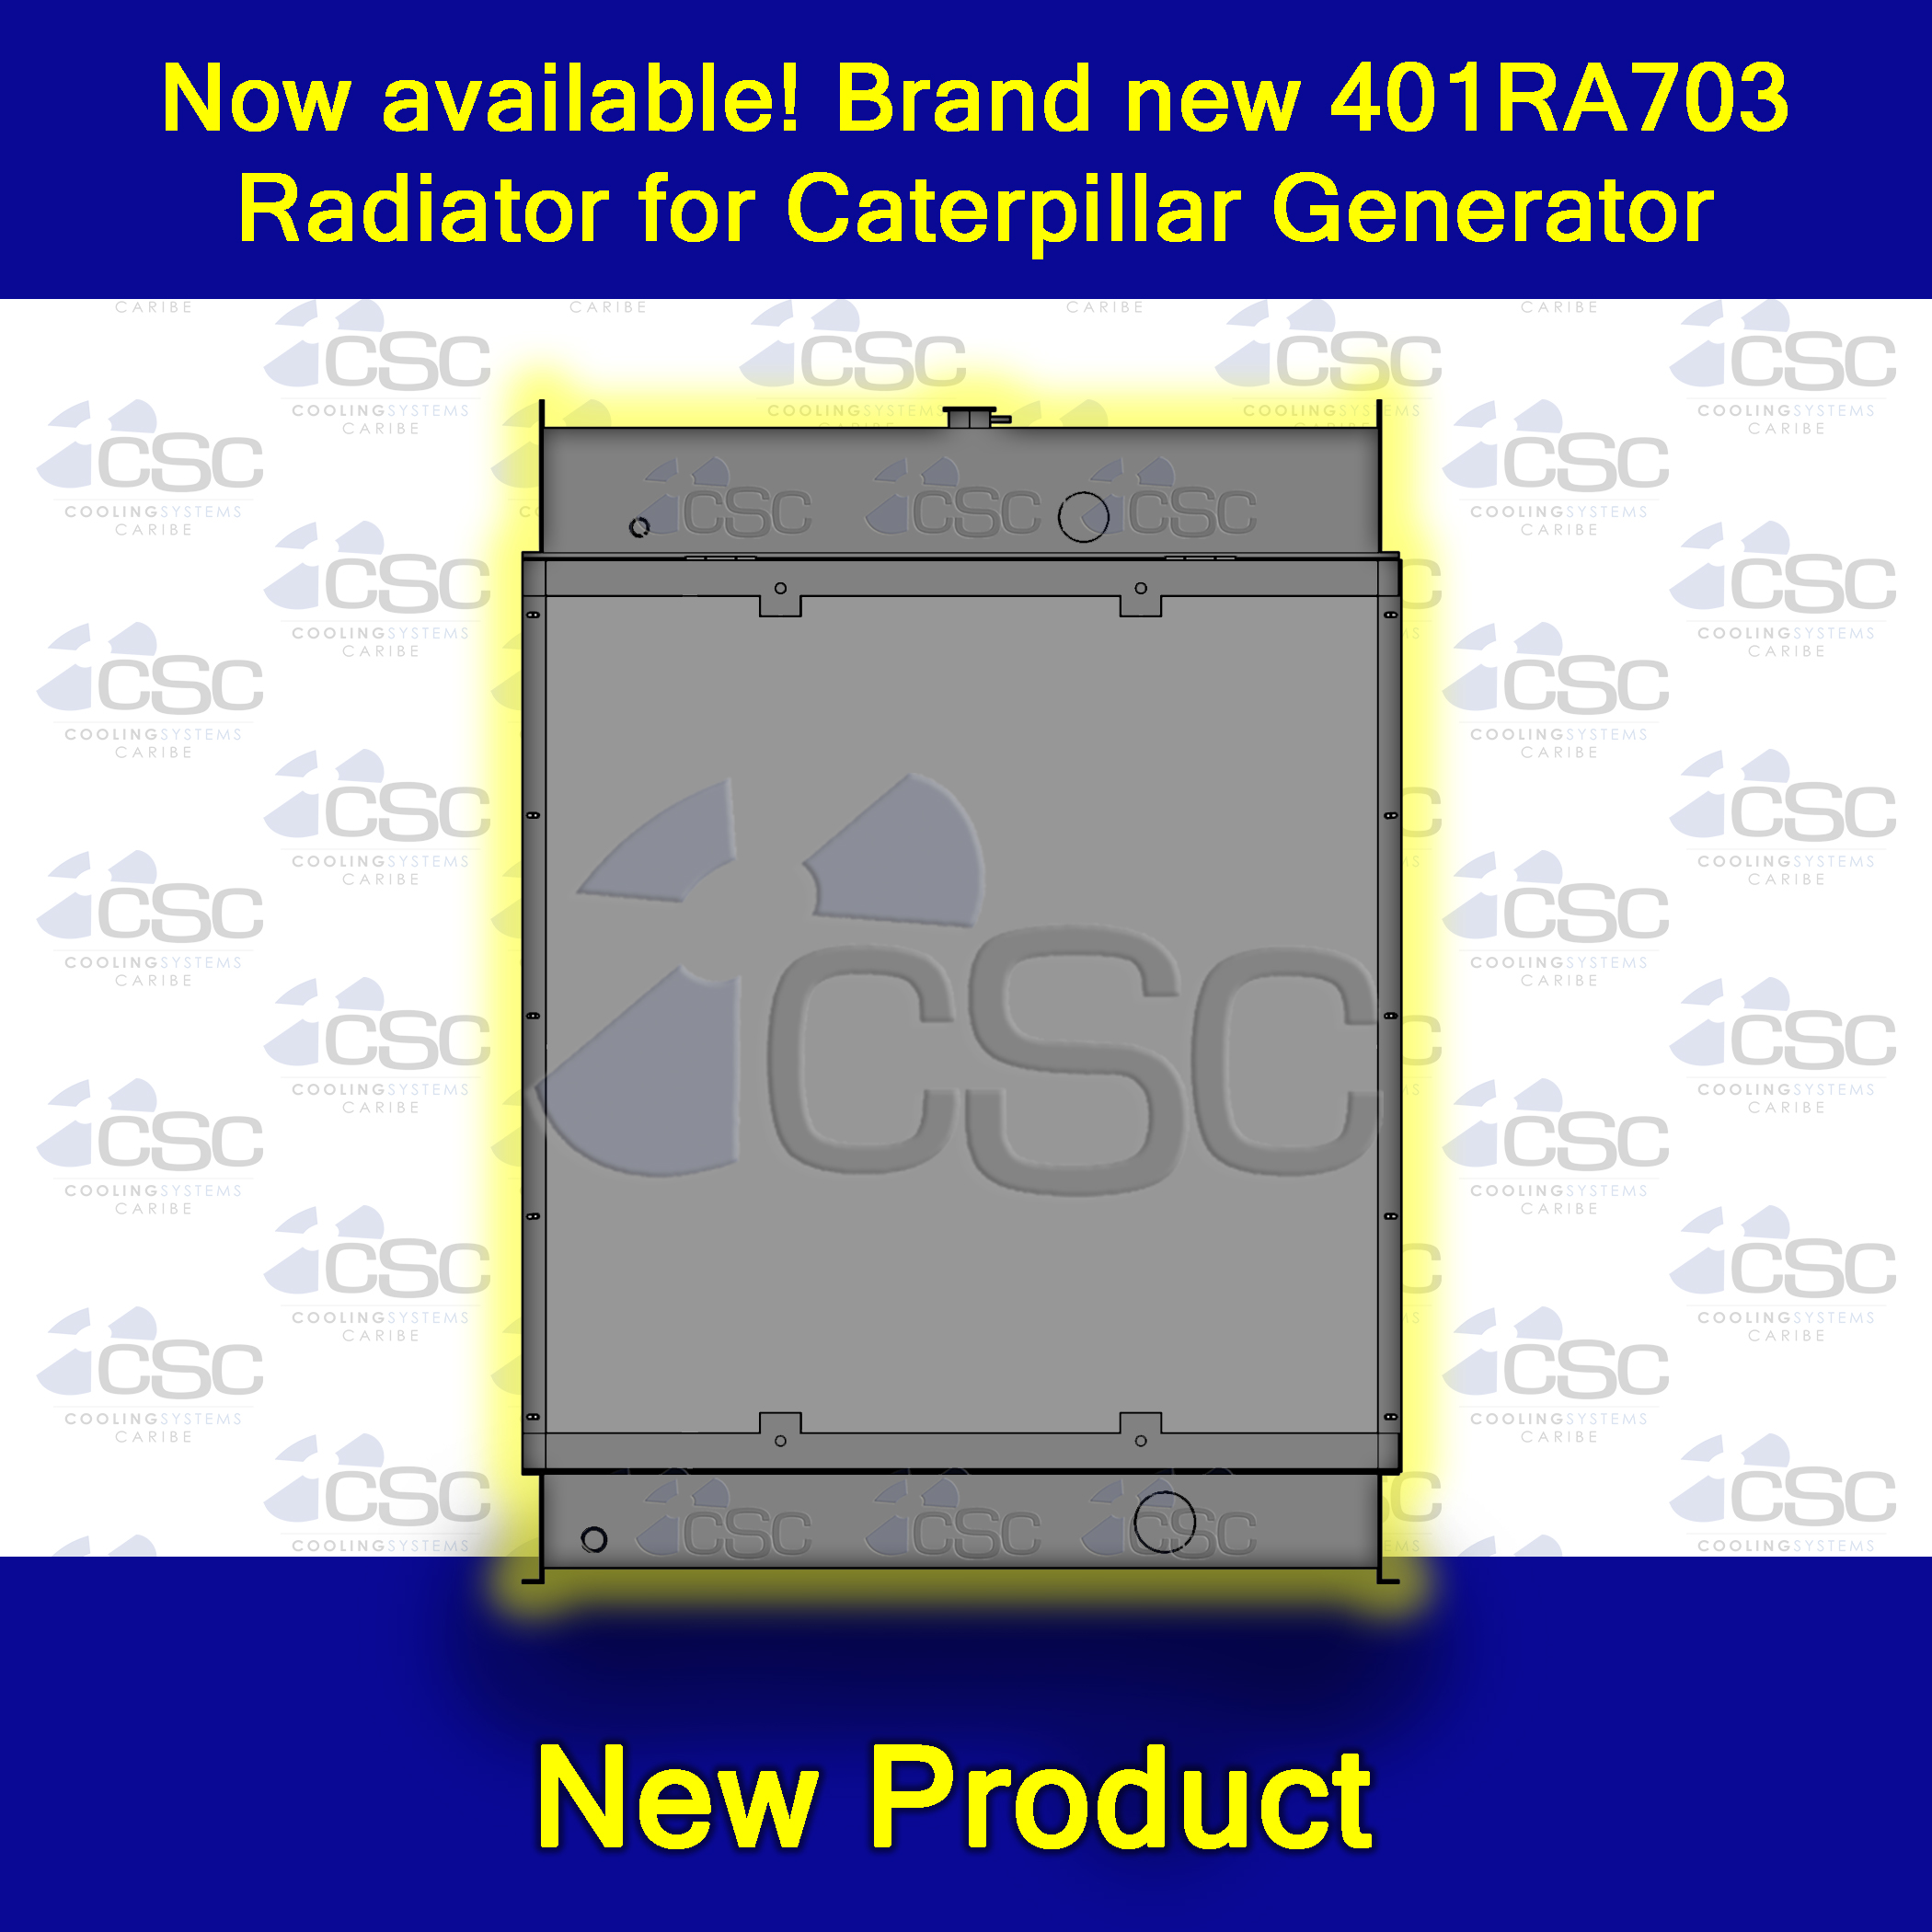 Now available! Brand new 401RA703 Radiator for Caterpillar Generator